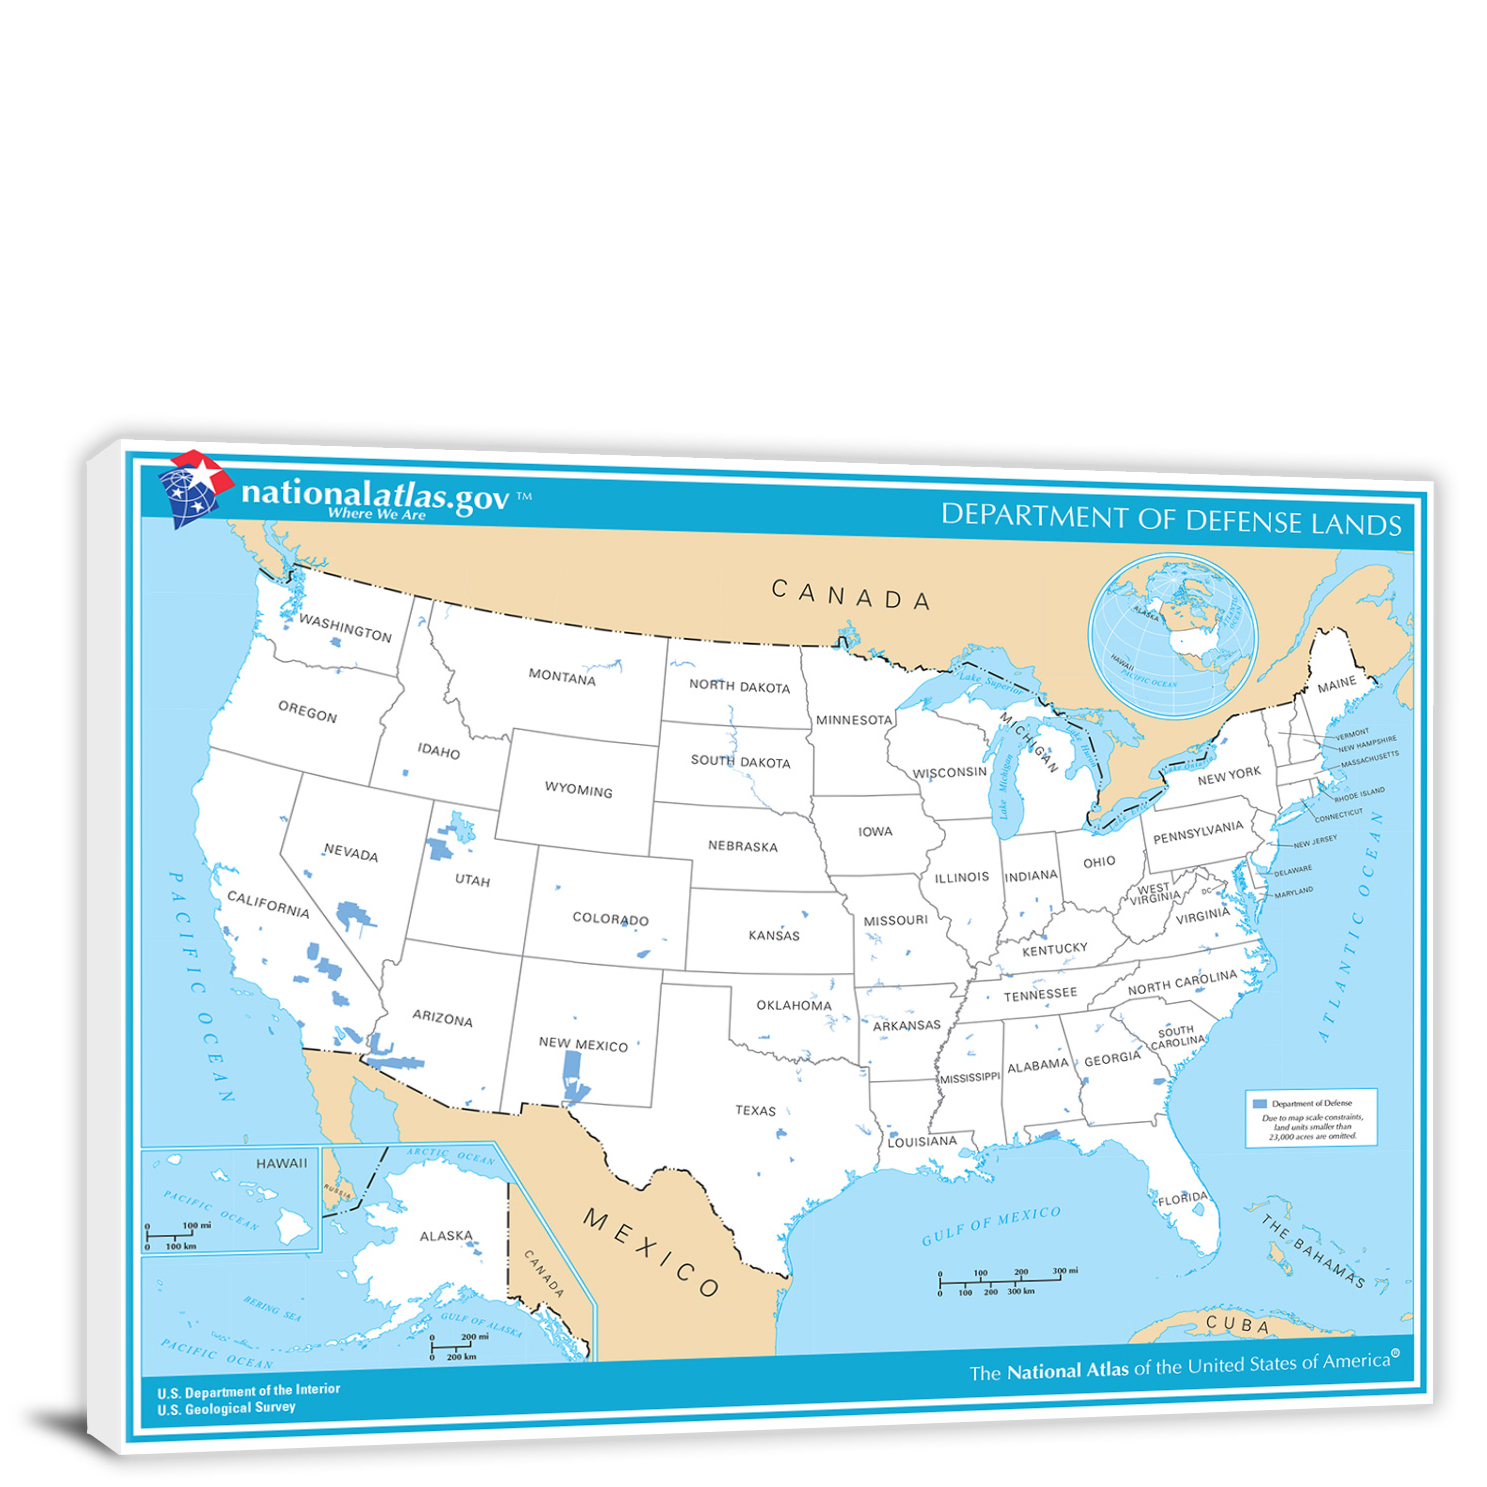 CWA368 Usa National Atlas Department Of Defense Lands Map 00 